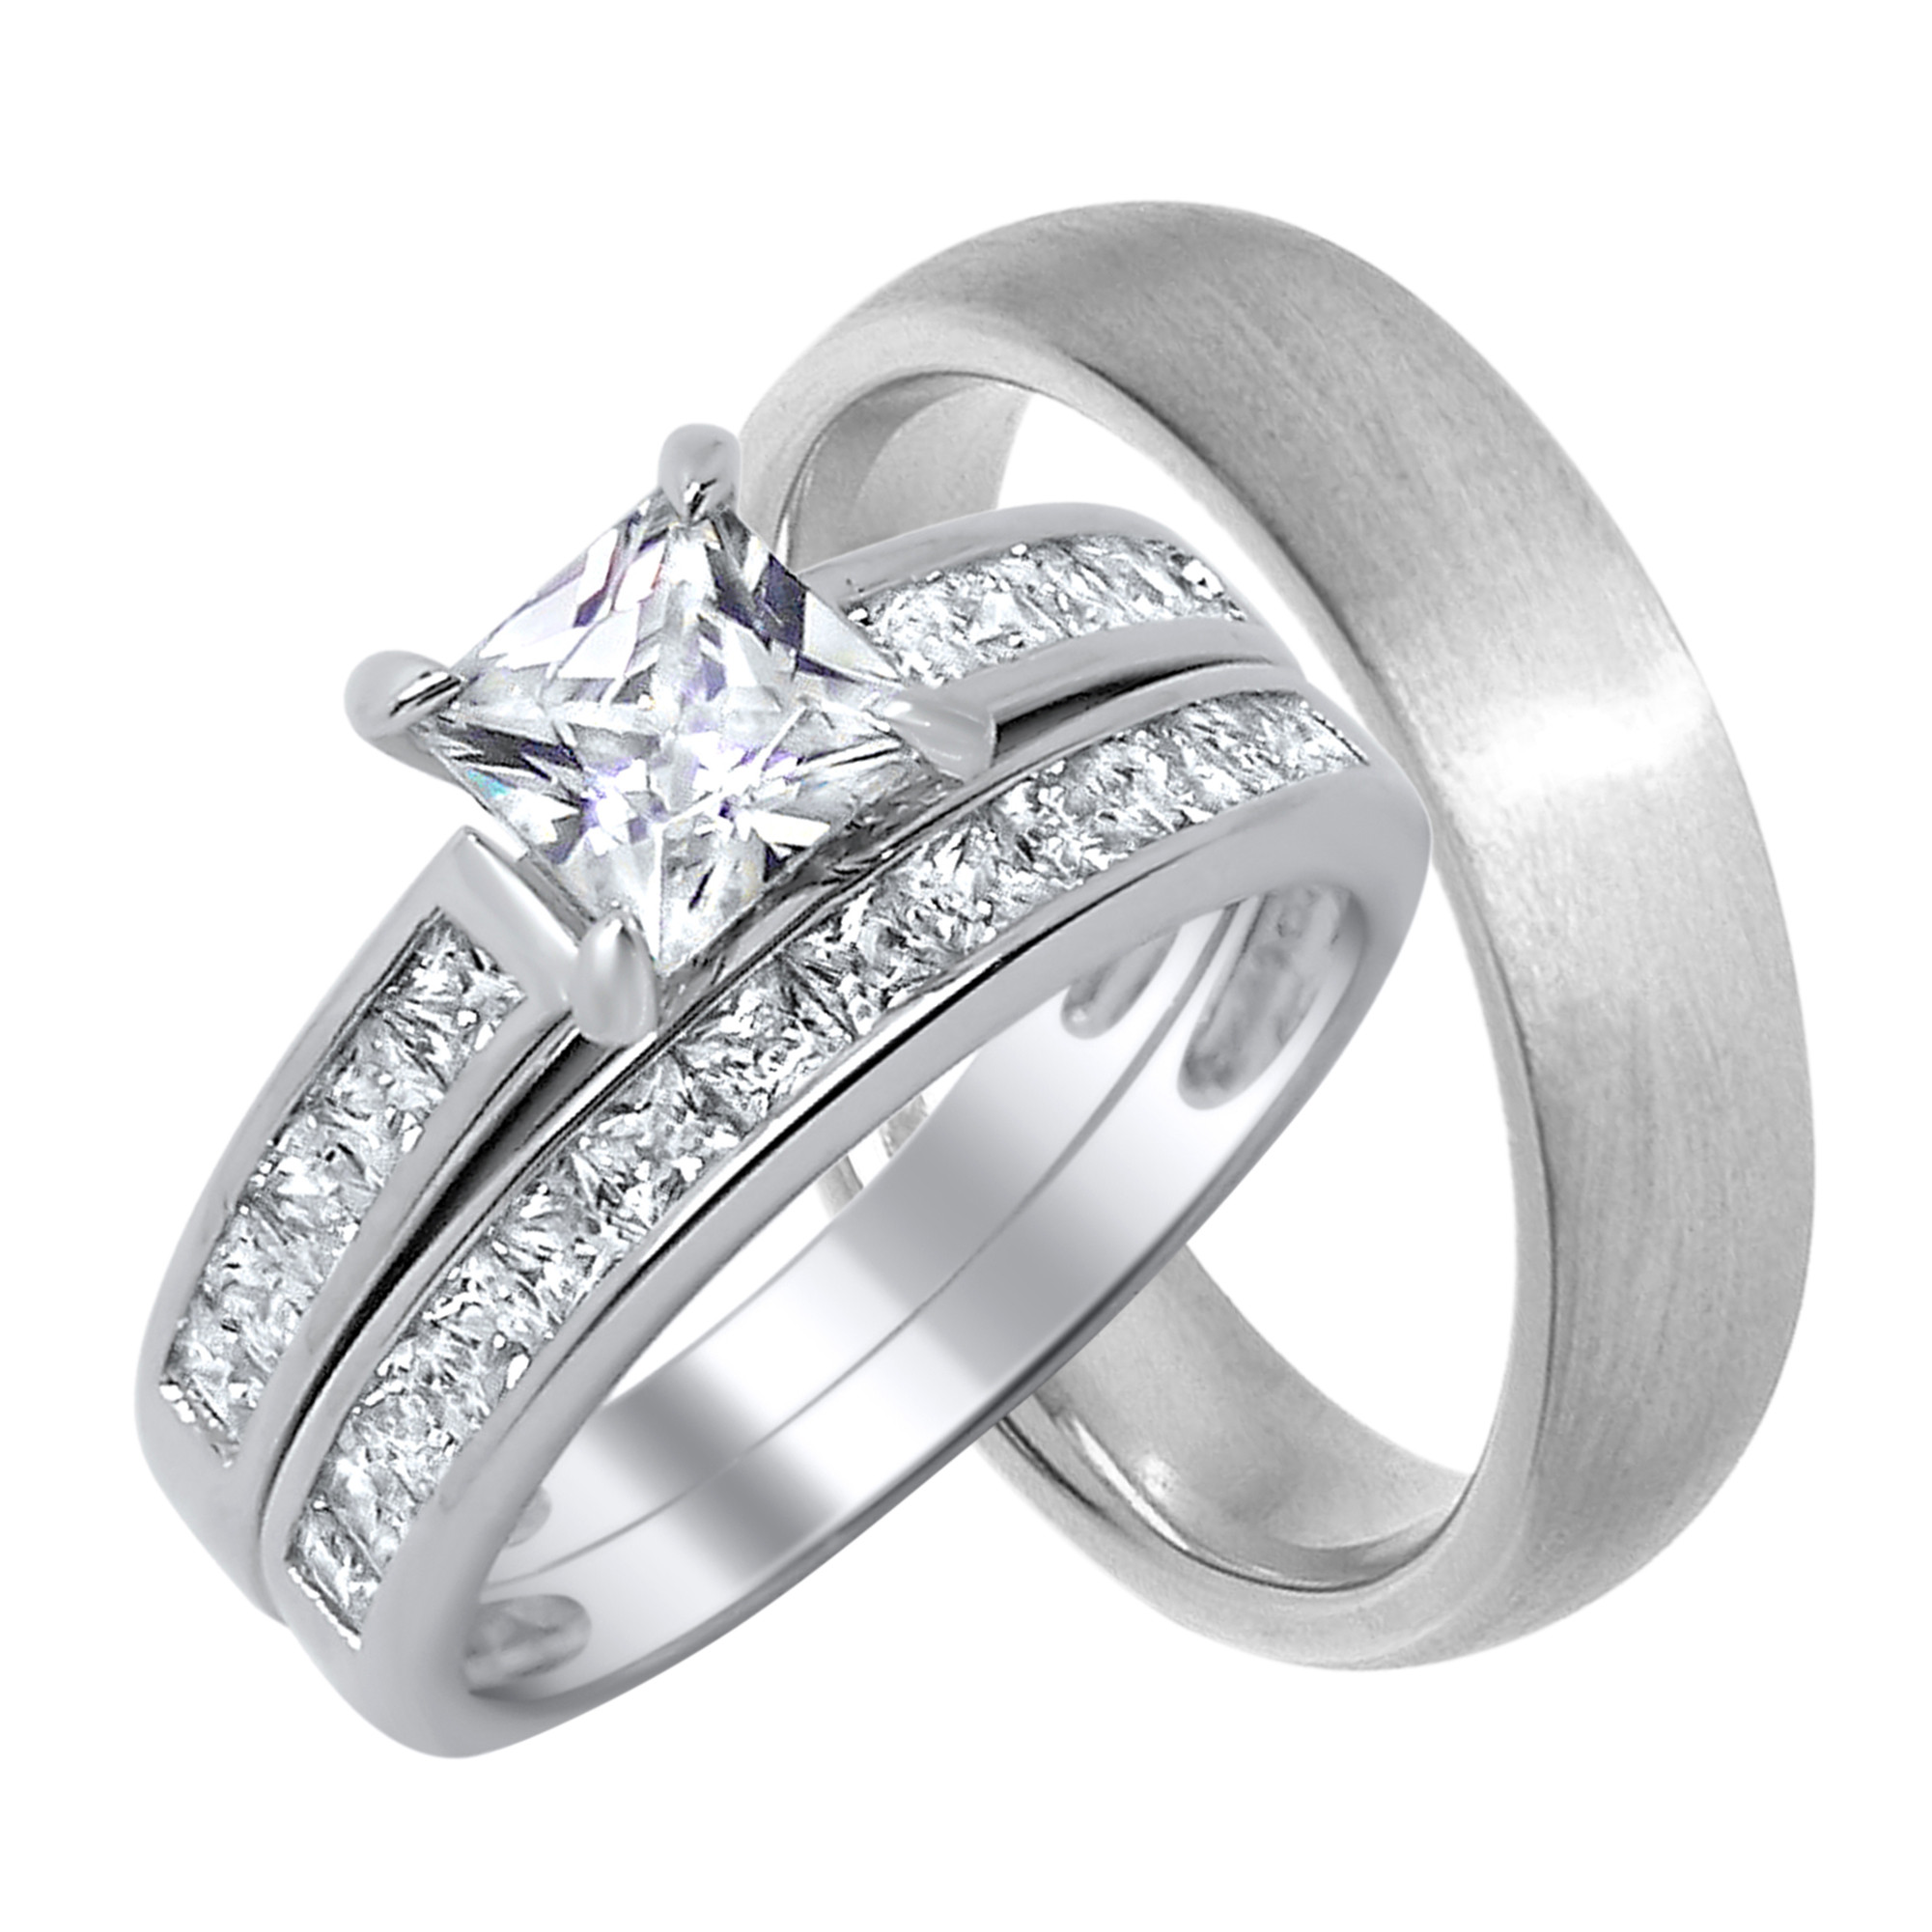 Wedding Rings Sets At Walmart
 LaRaso & Co His and Her Wedding Ring Sets Matching Bands